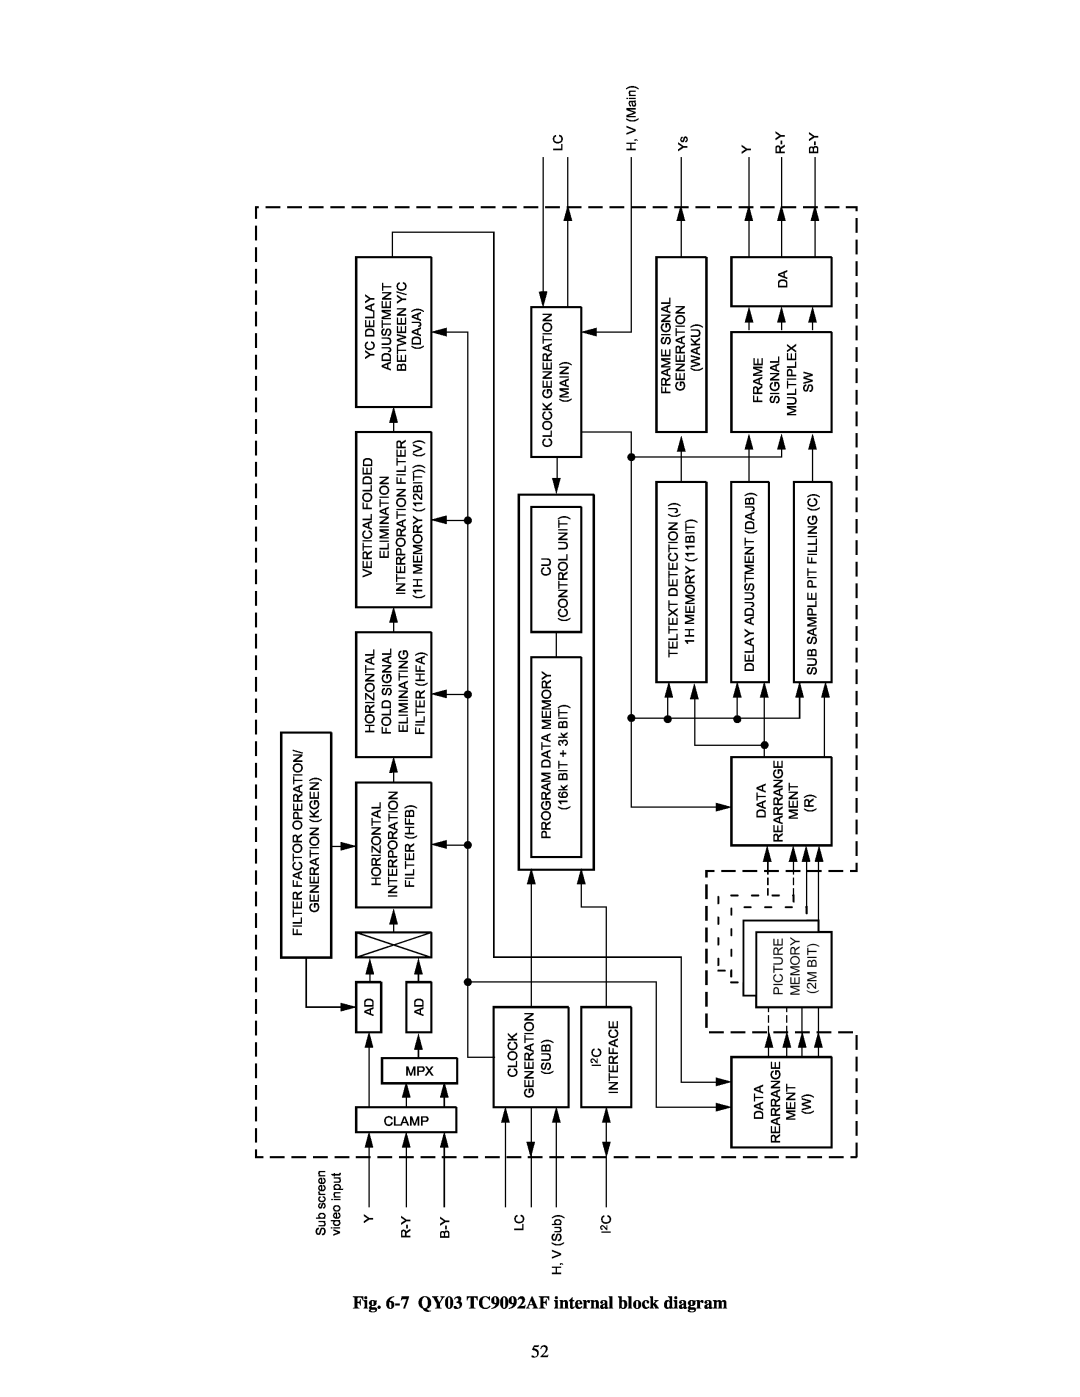 Toshiba TW40F80 manual 7 QY03 TC9092AF internal block diagram, Multiplex, Programdata, Memory, Rearrange, Clamp 